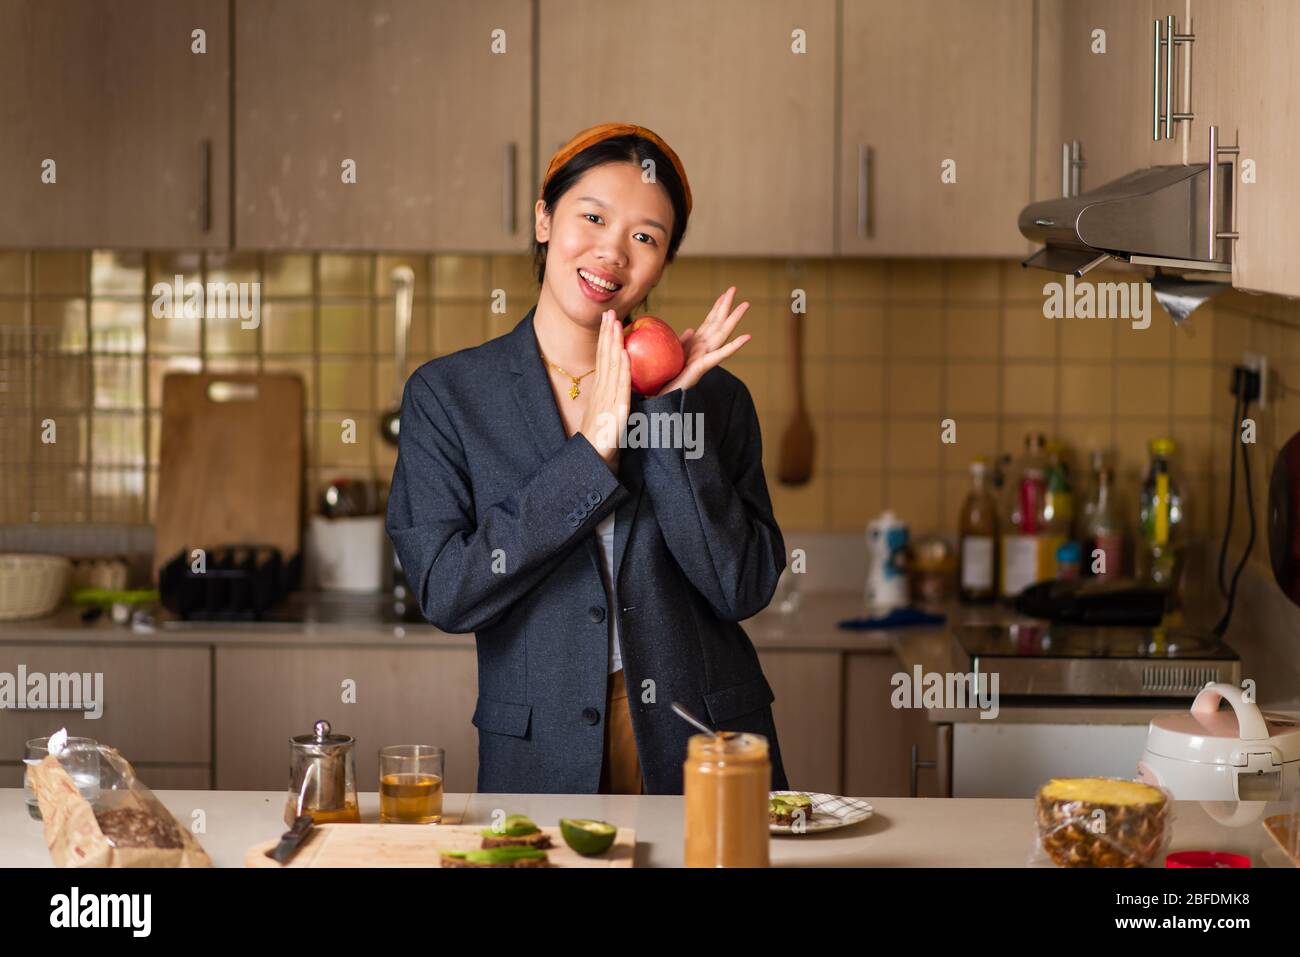 Allegra donna asiatica ingannare tenendo una mela in cucina Foto Stock